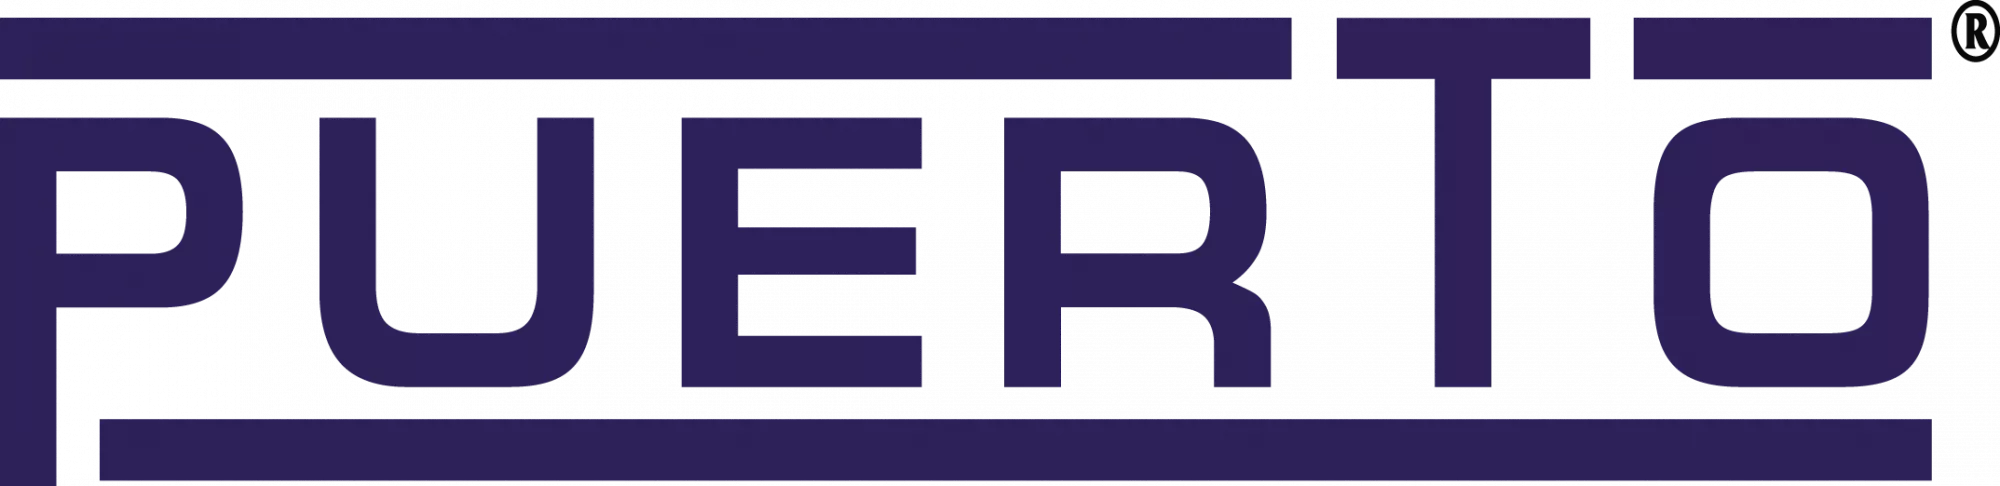 Puerto logo